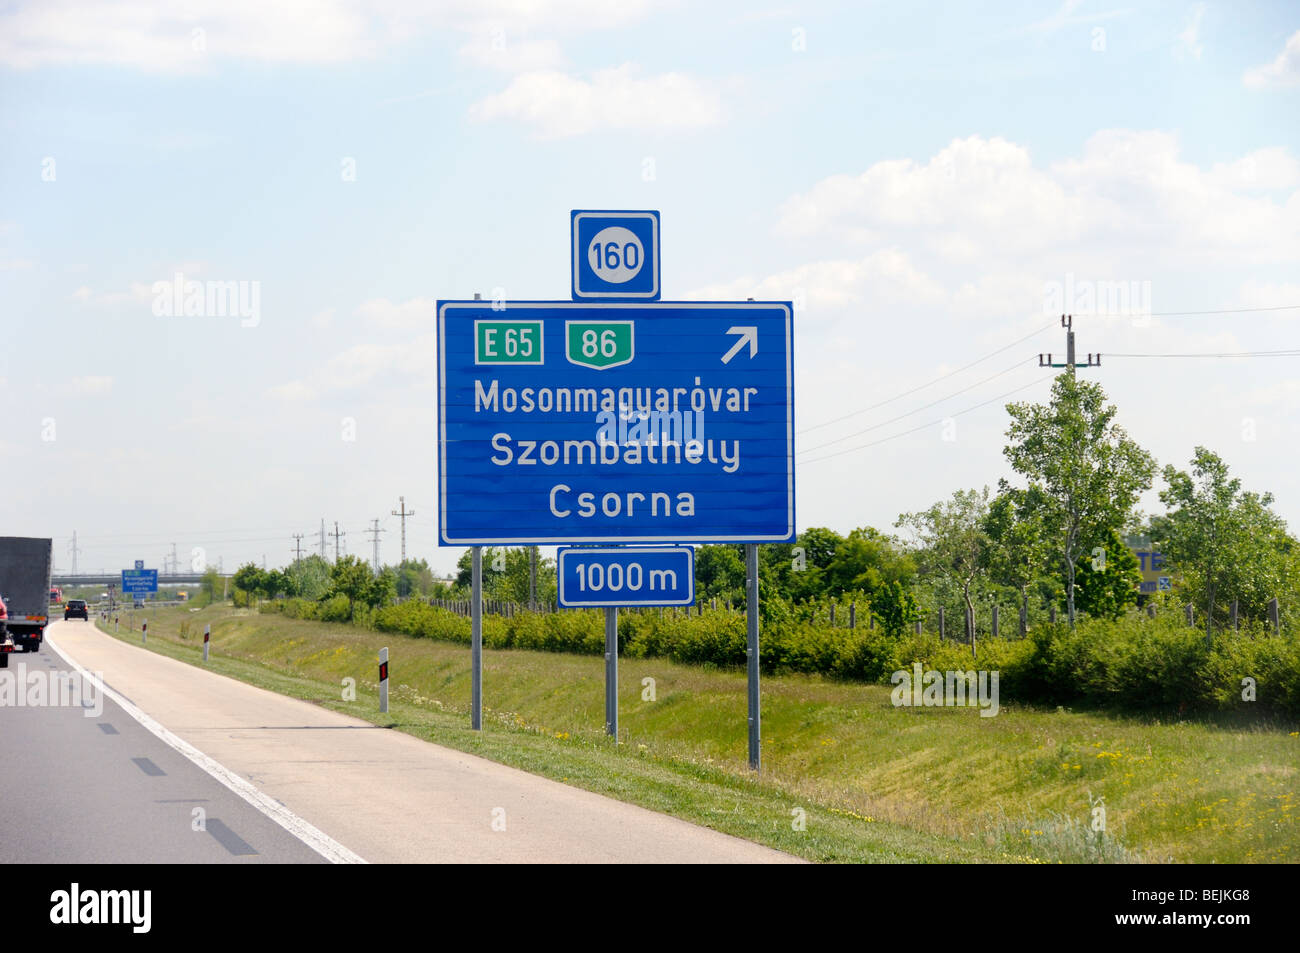 Road sign in Hungary Eastern Europe to Mosonmagyarovar Szombathely Csorna Stock Photo